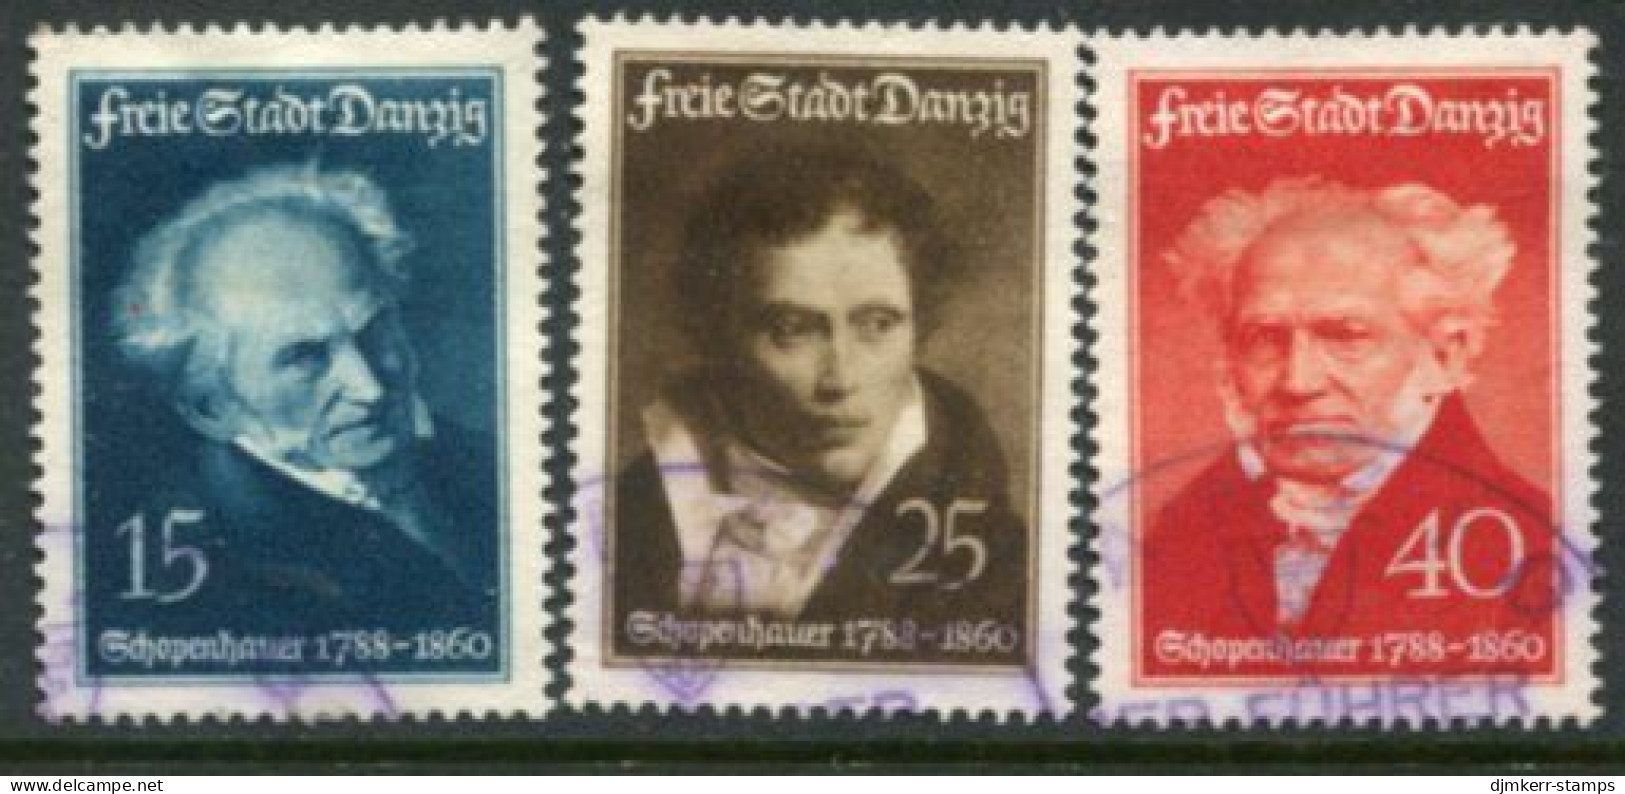 DANZIG 1938 Schopenhauer Birth Anniversary Used  Michel 281-83 - Afgestempeld